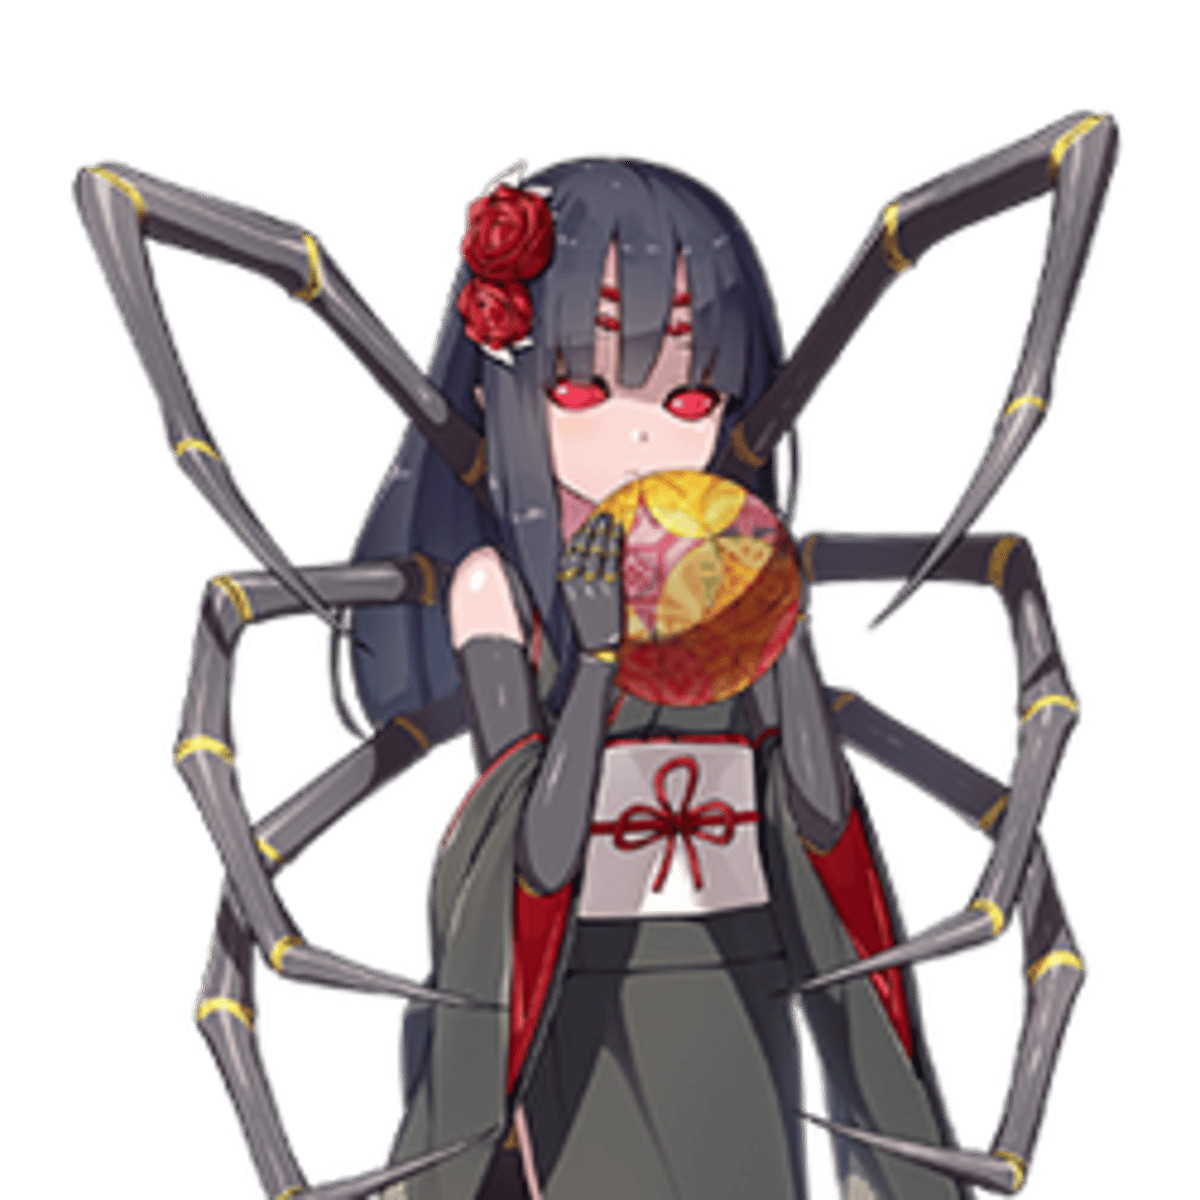 Spider girl komachi